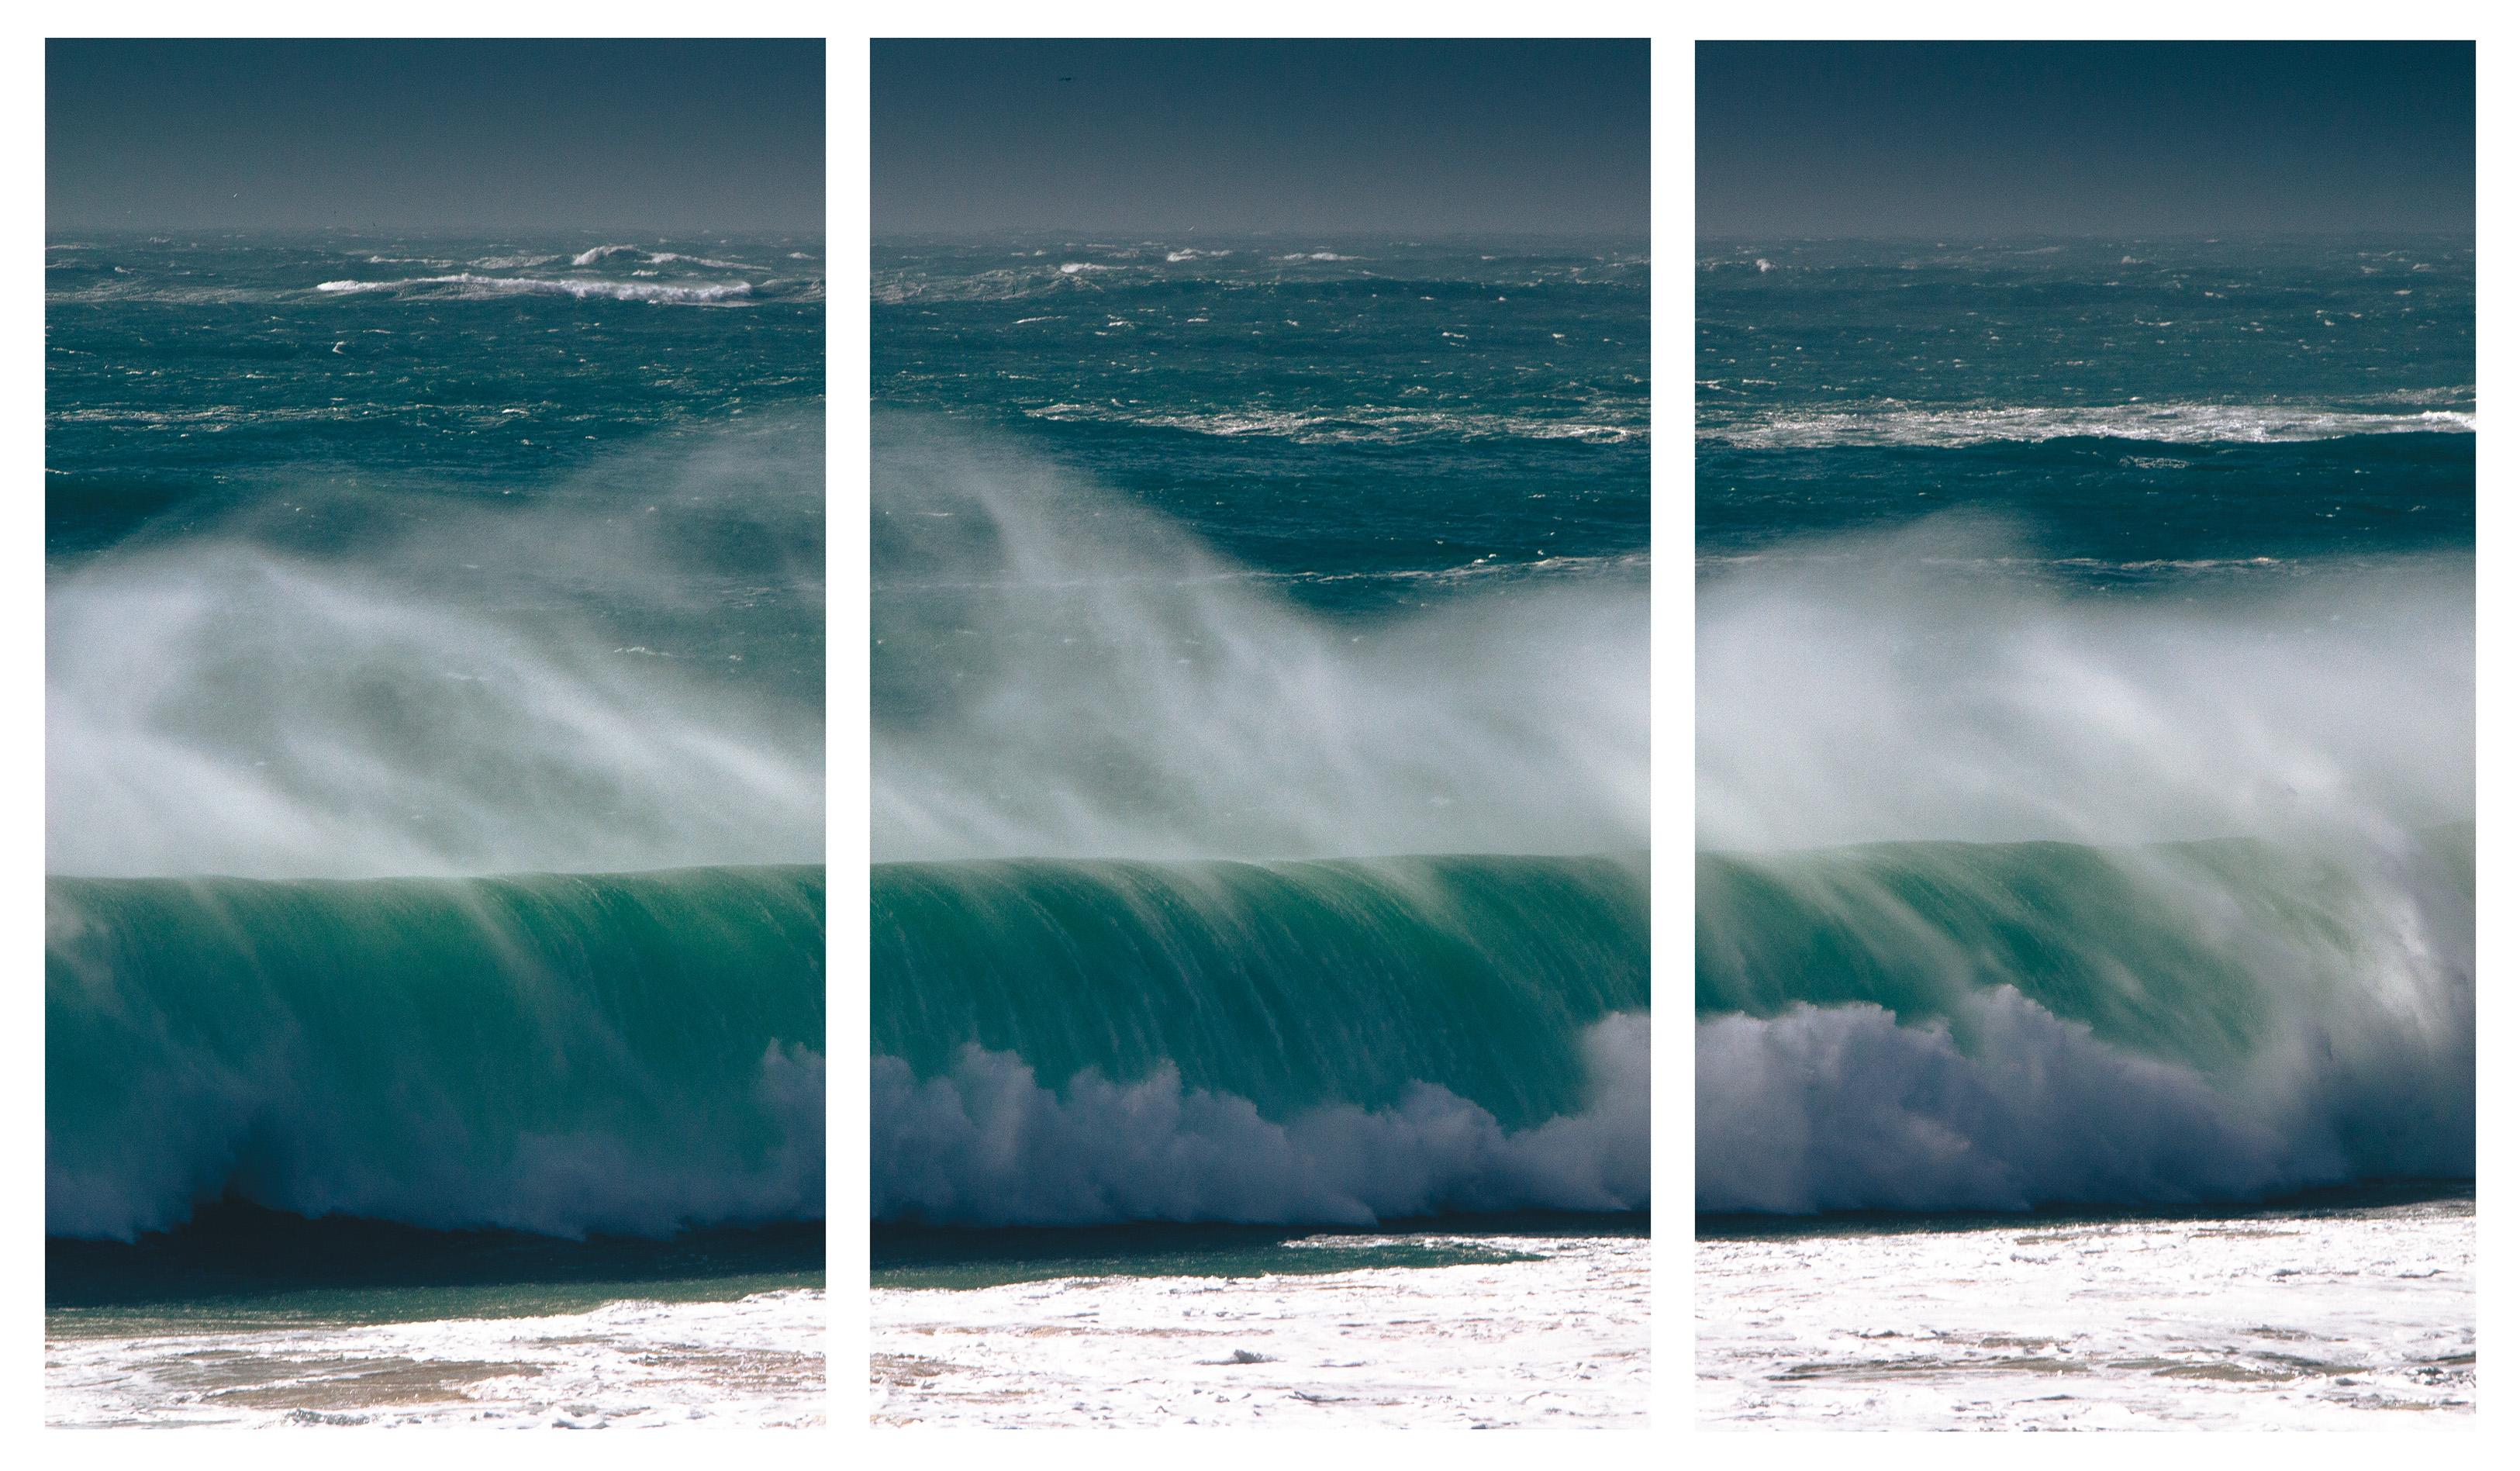 'Pounding Heart' Large scale triptych photograph. Ocean, sea, Beach cottage wave